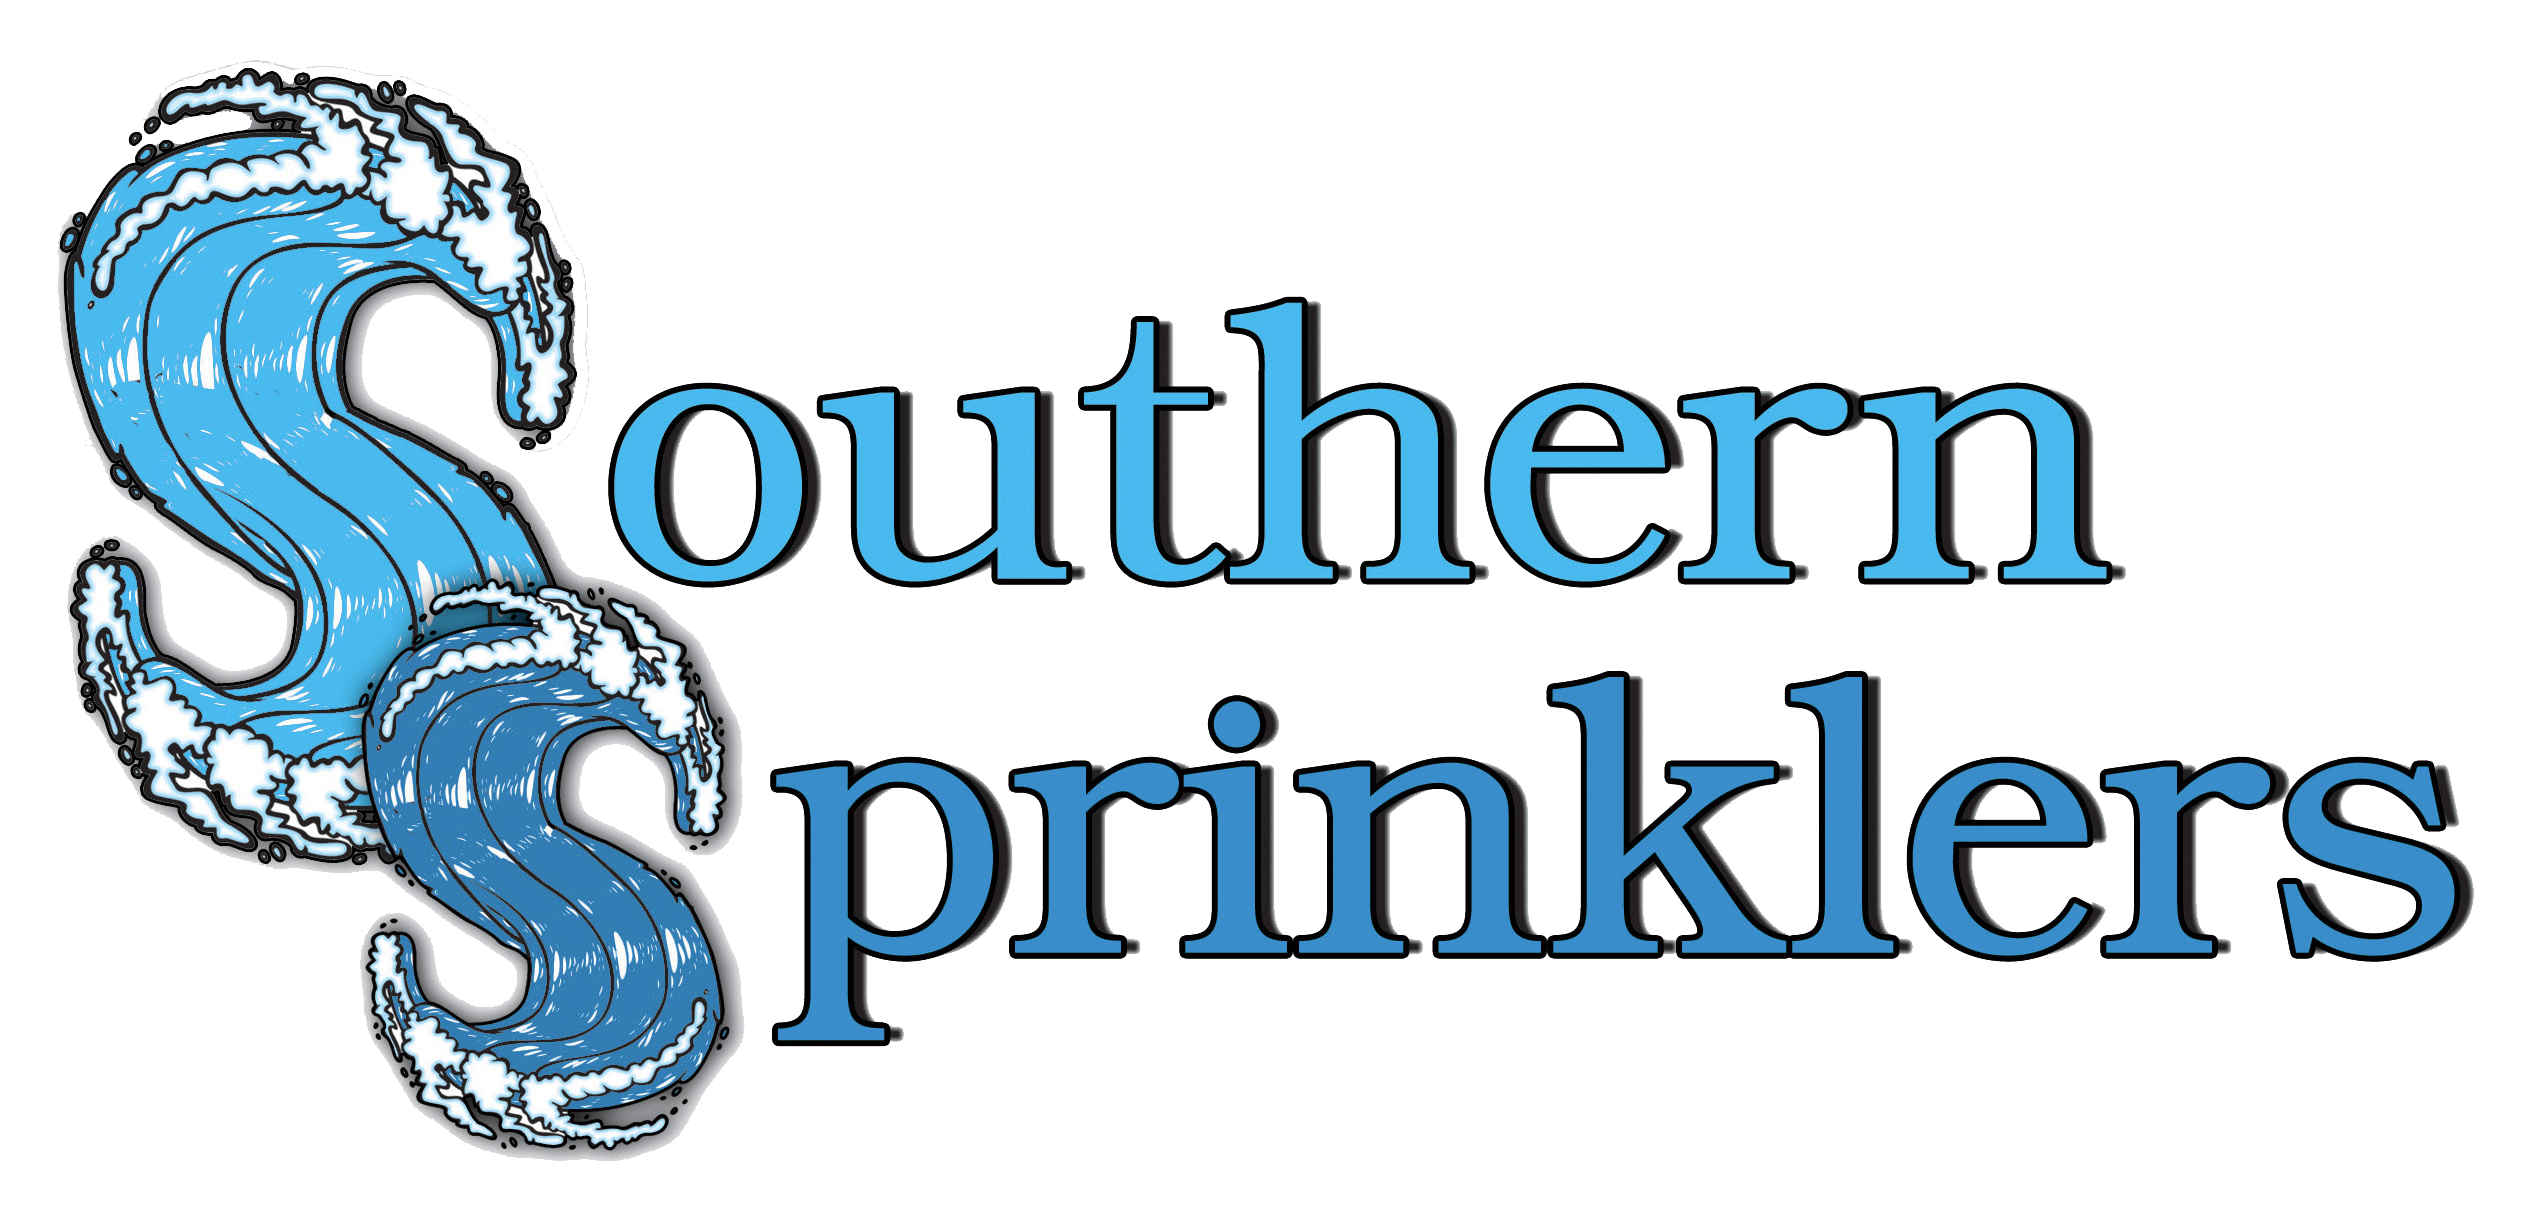 Southern Sprinklers logo